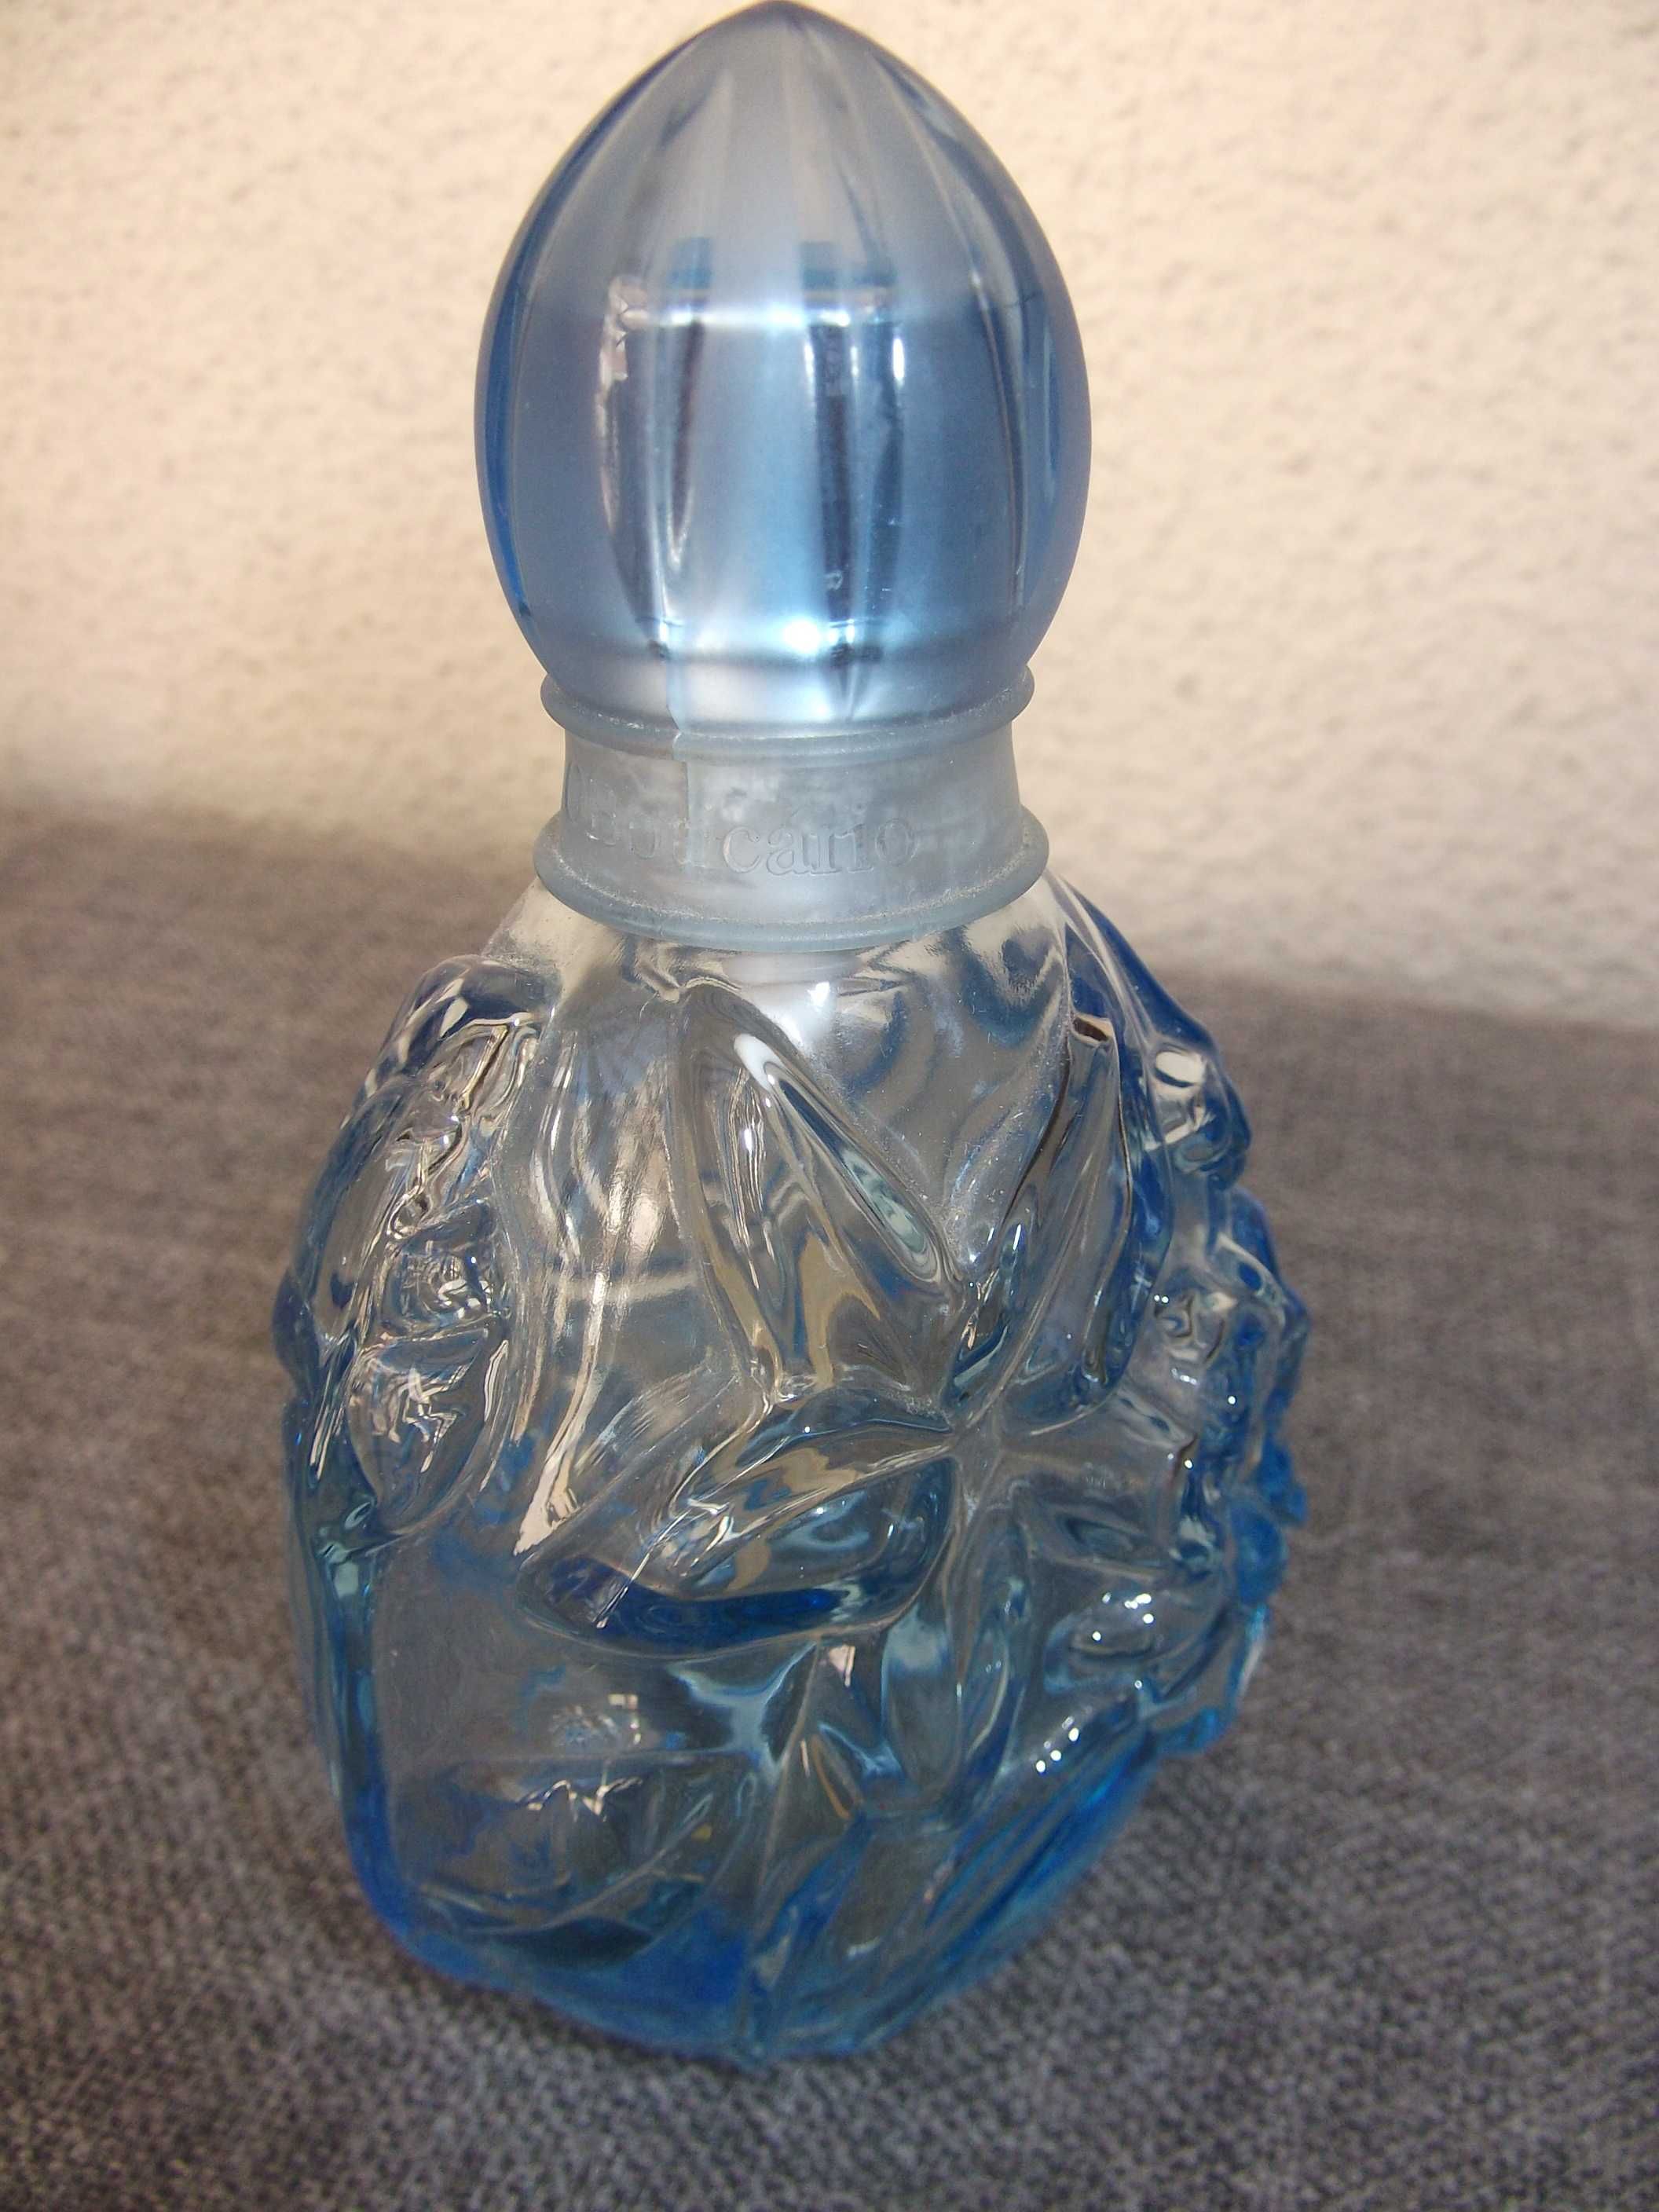 Frascos de perfume (SEM PERFUME) / Perfume bottles (WITHOUT PERFUME)